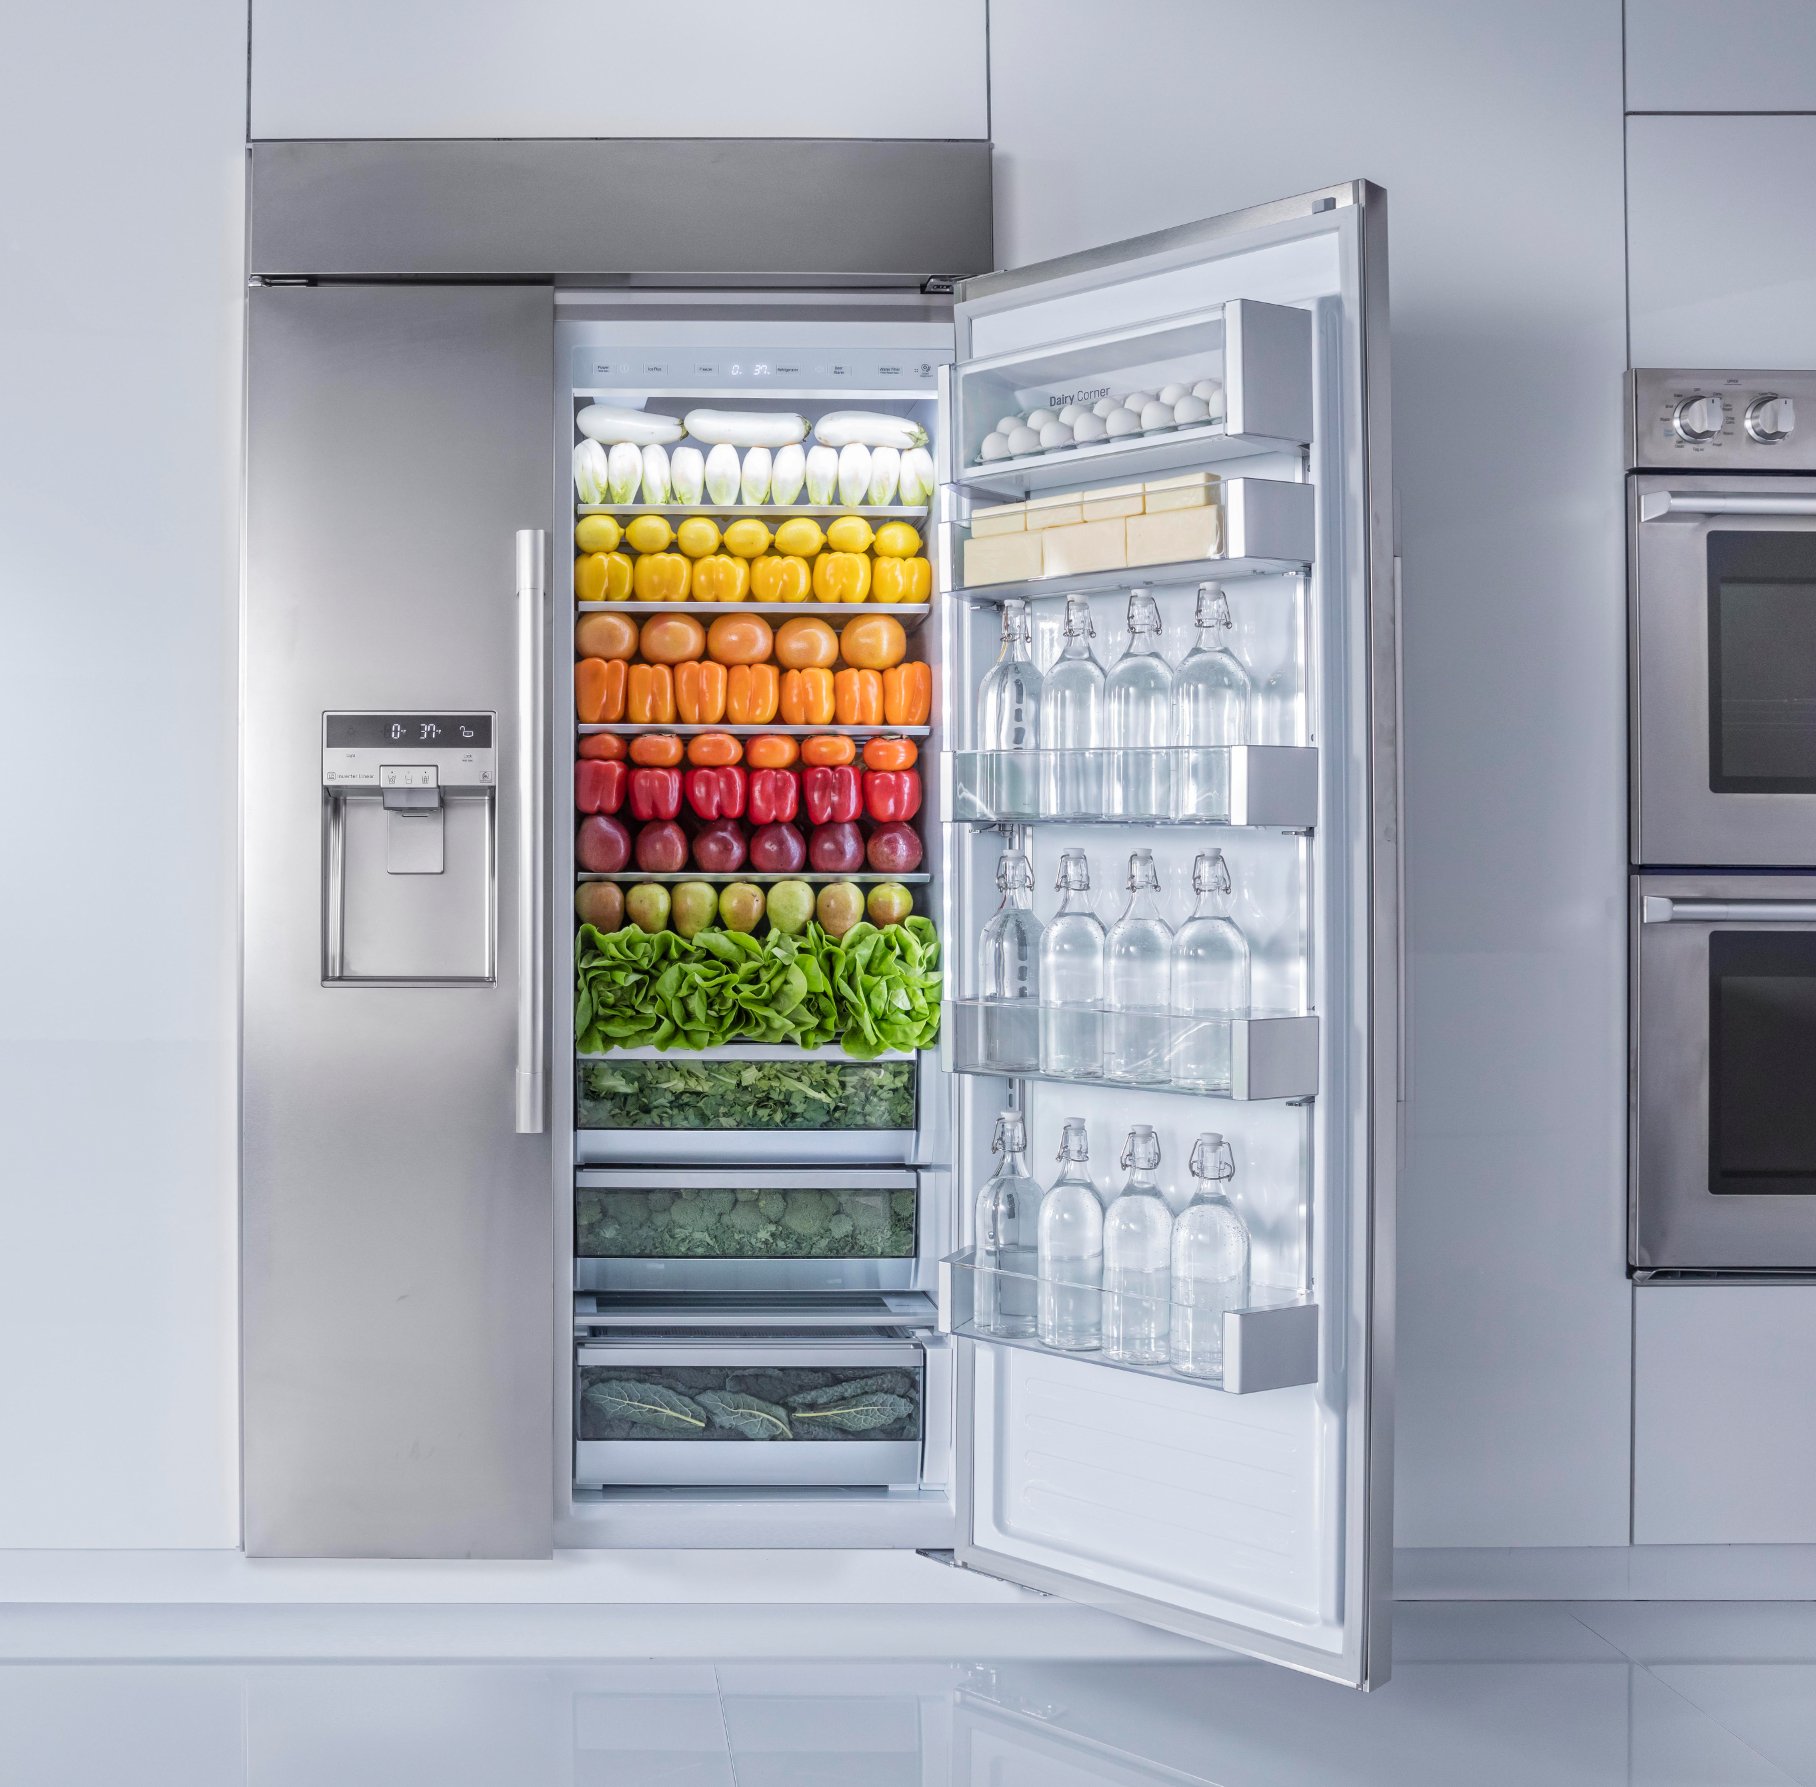 10b.LG Refrigerator cropped.jpg